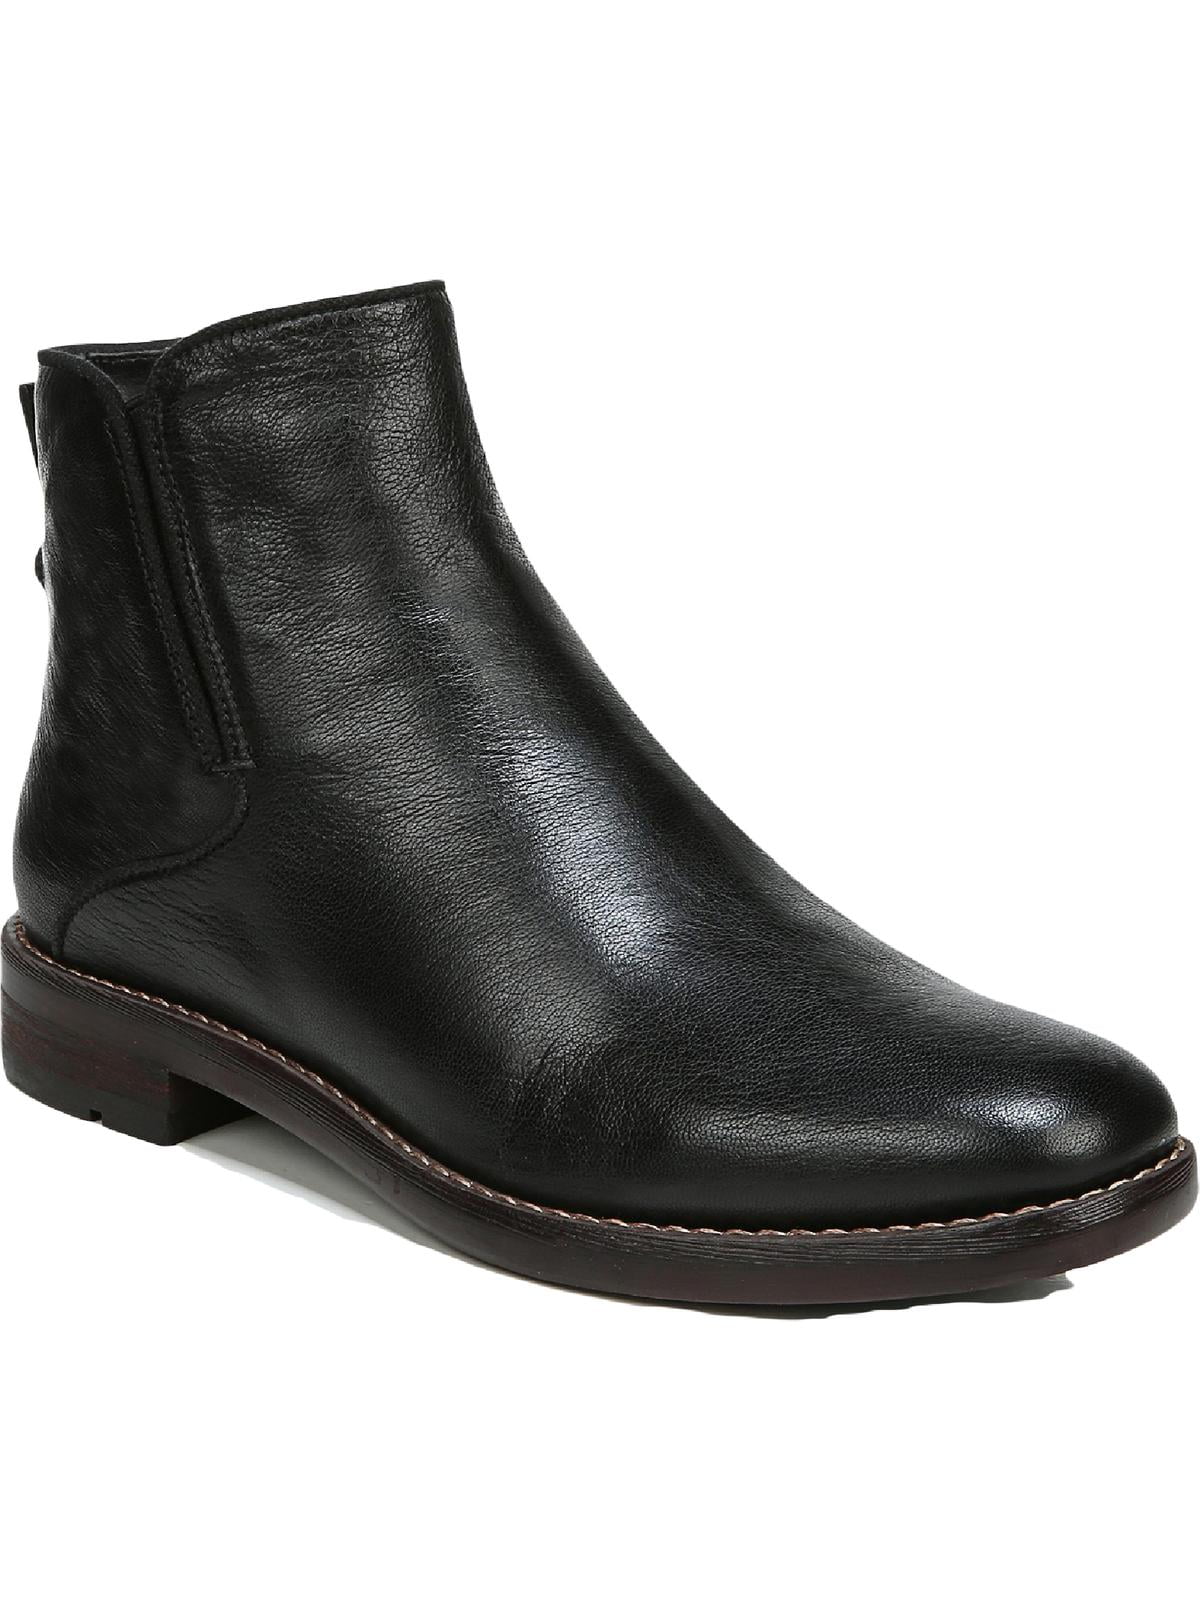 Franco Sarto Womens Marcus Leather Comfort Booties - Walmart.com